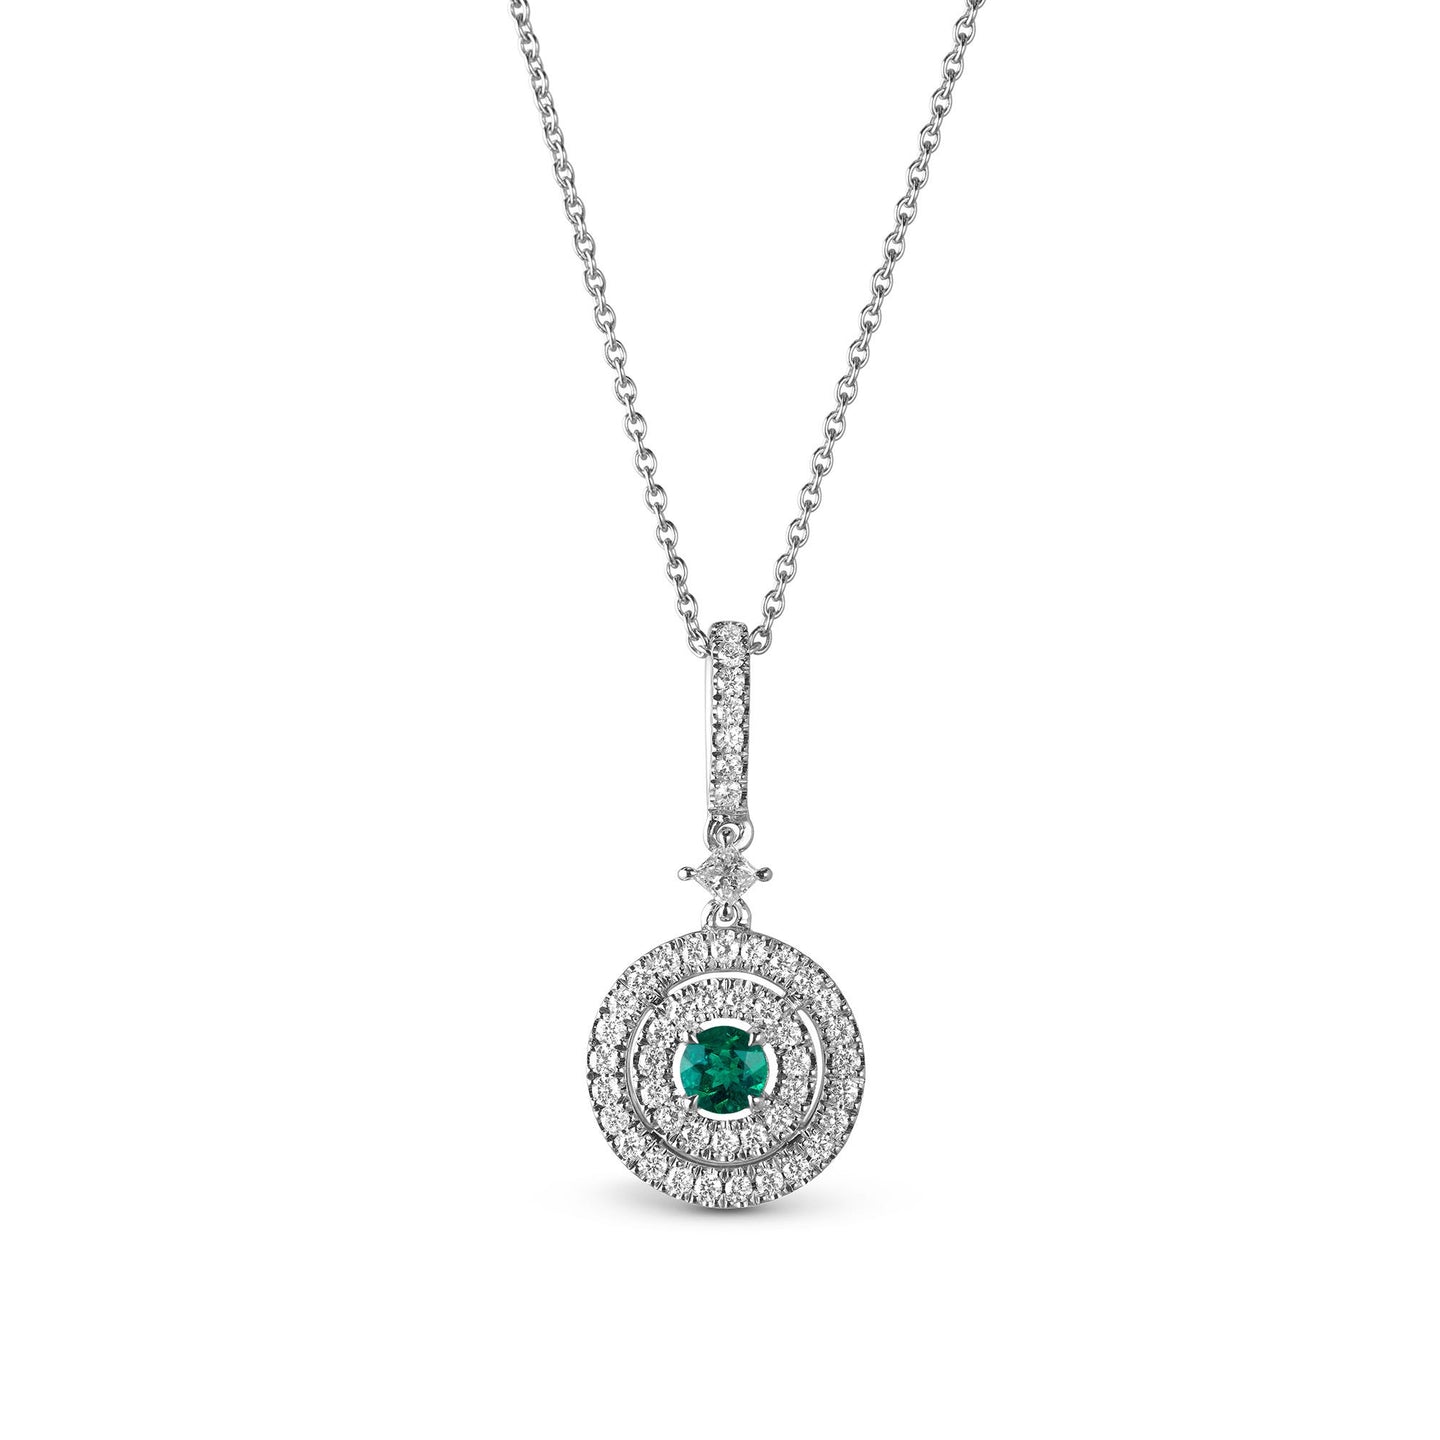 Platinum Drop Pendant with Emerald and Diamonds